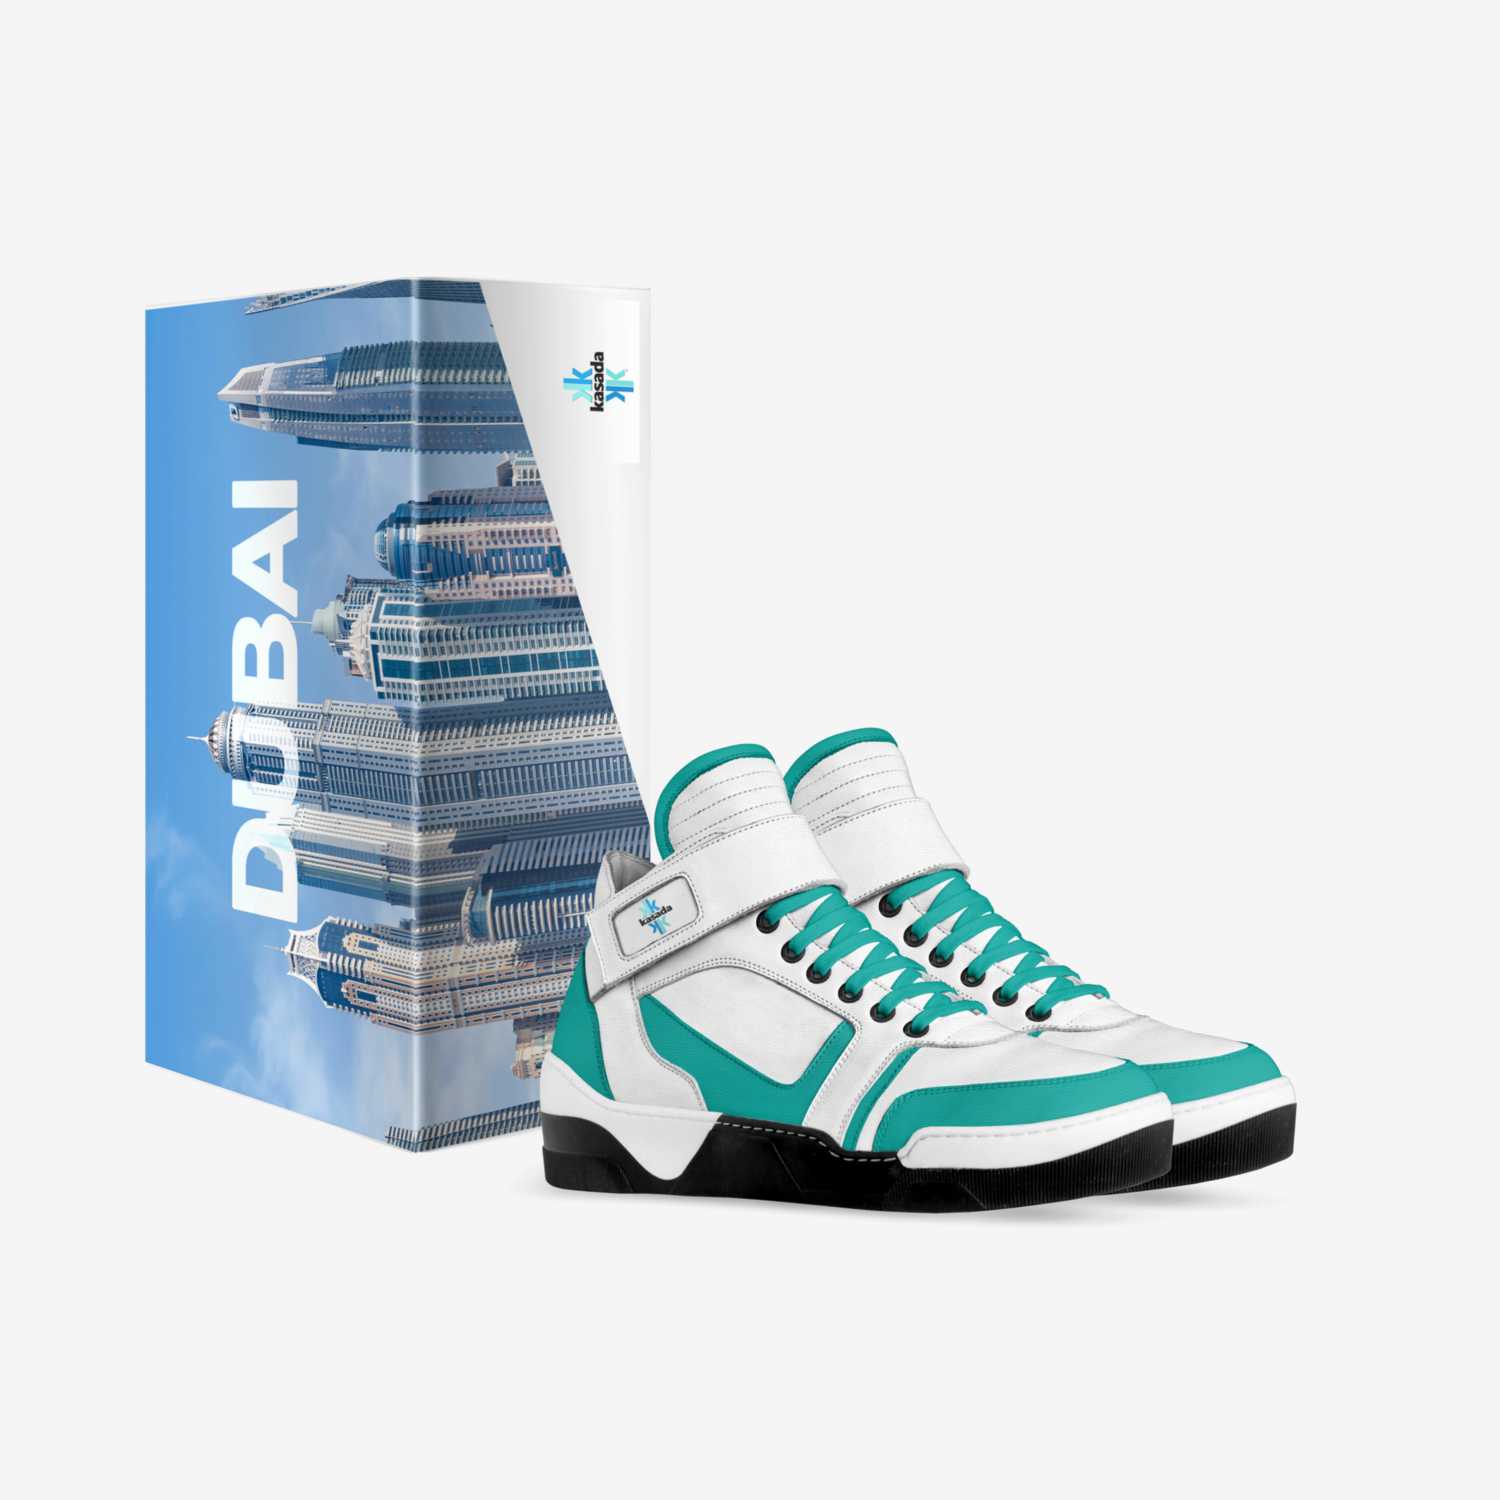 KASADA custom made in Italy shoes by Glenn Wilder | Box view